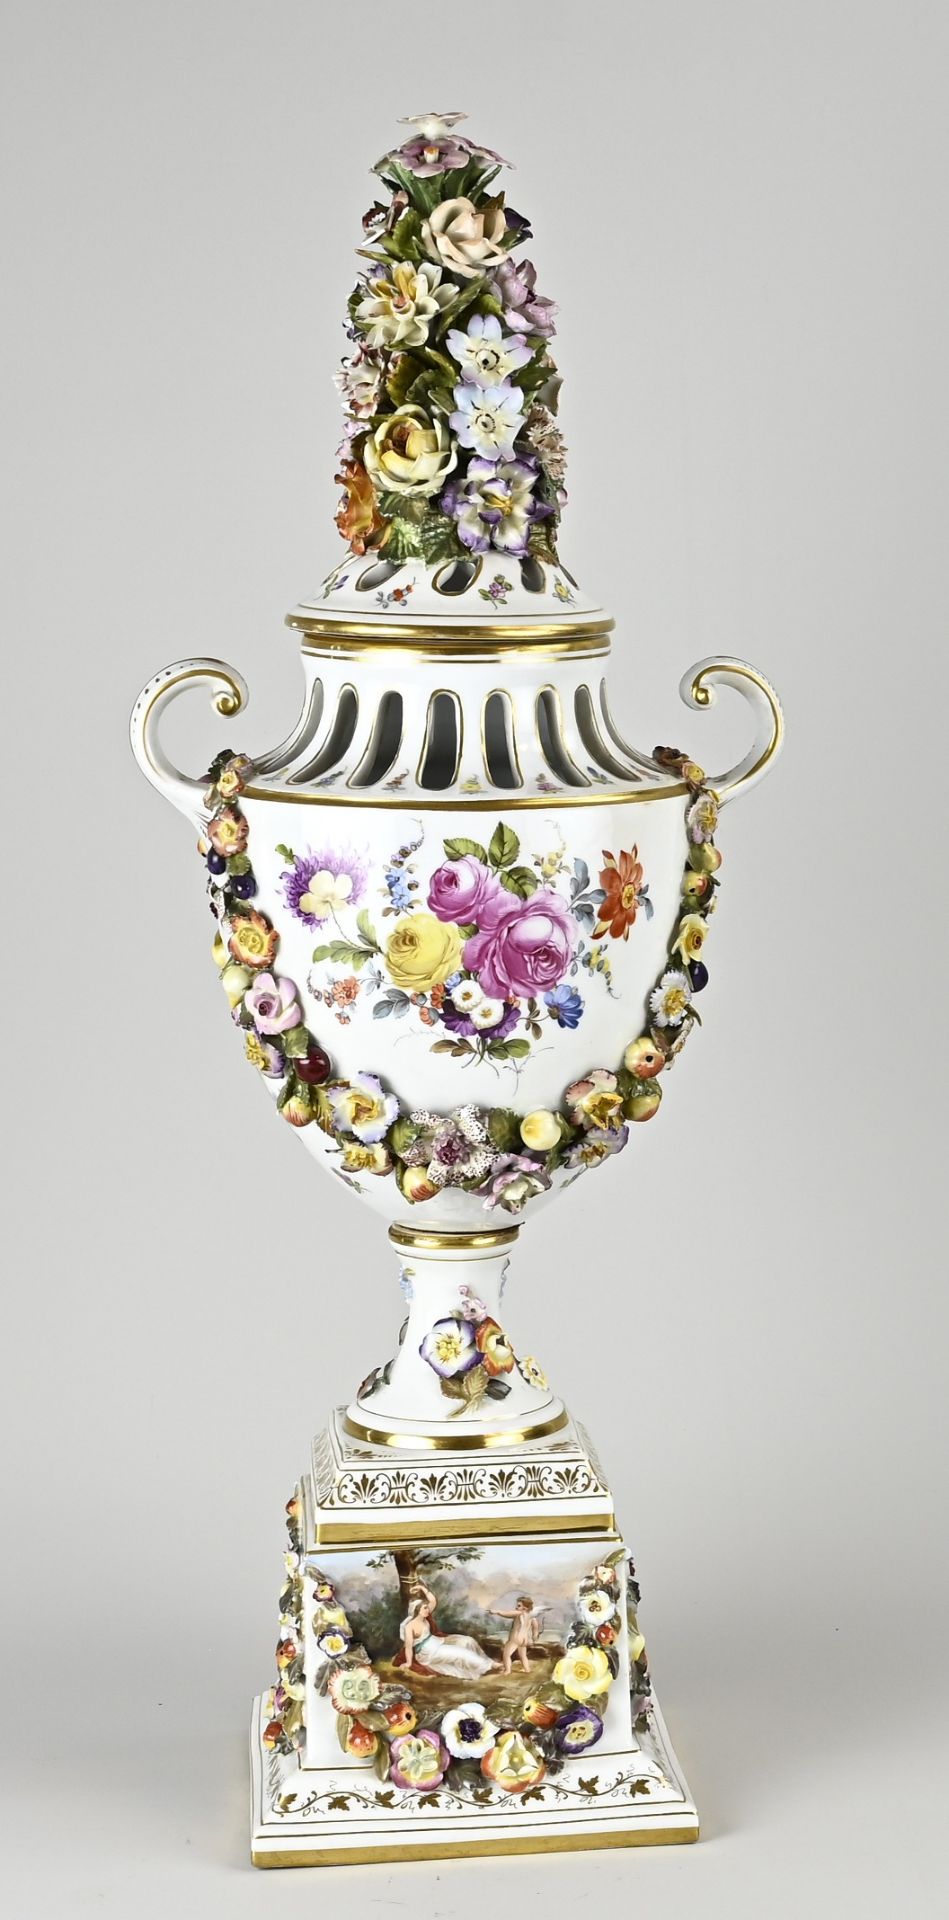 Kapitale Potschappel display vase, H 60 cm. - Image 2 of 3